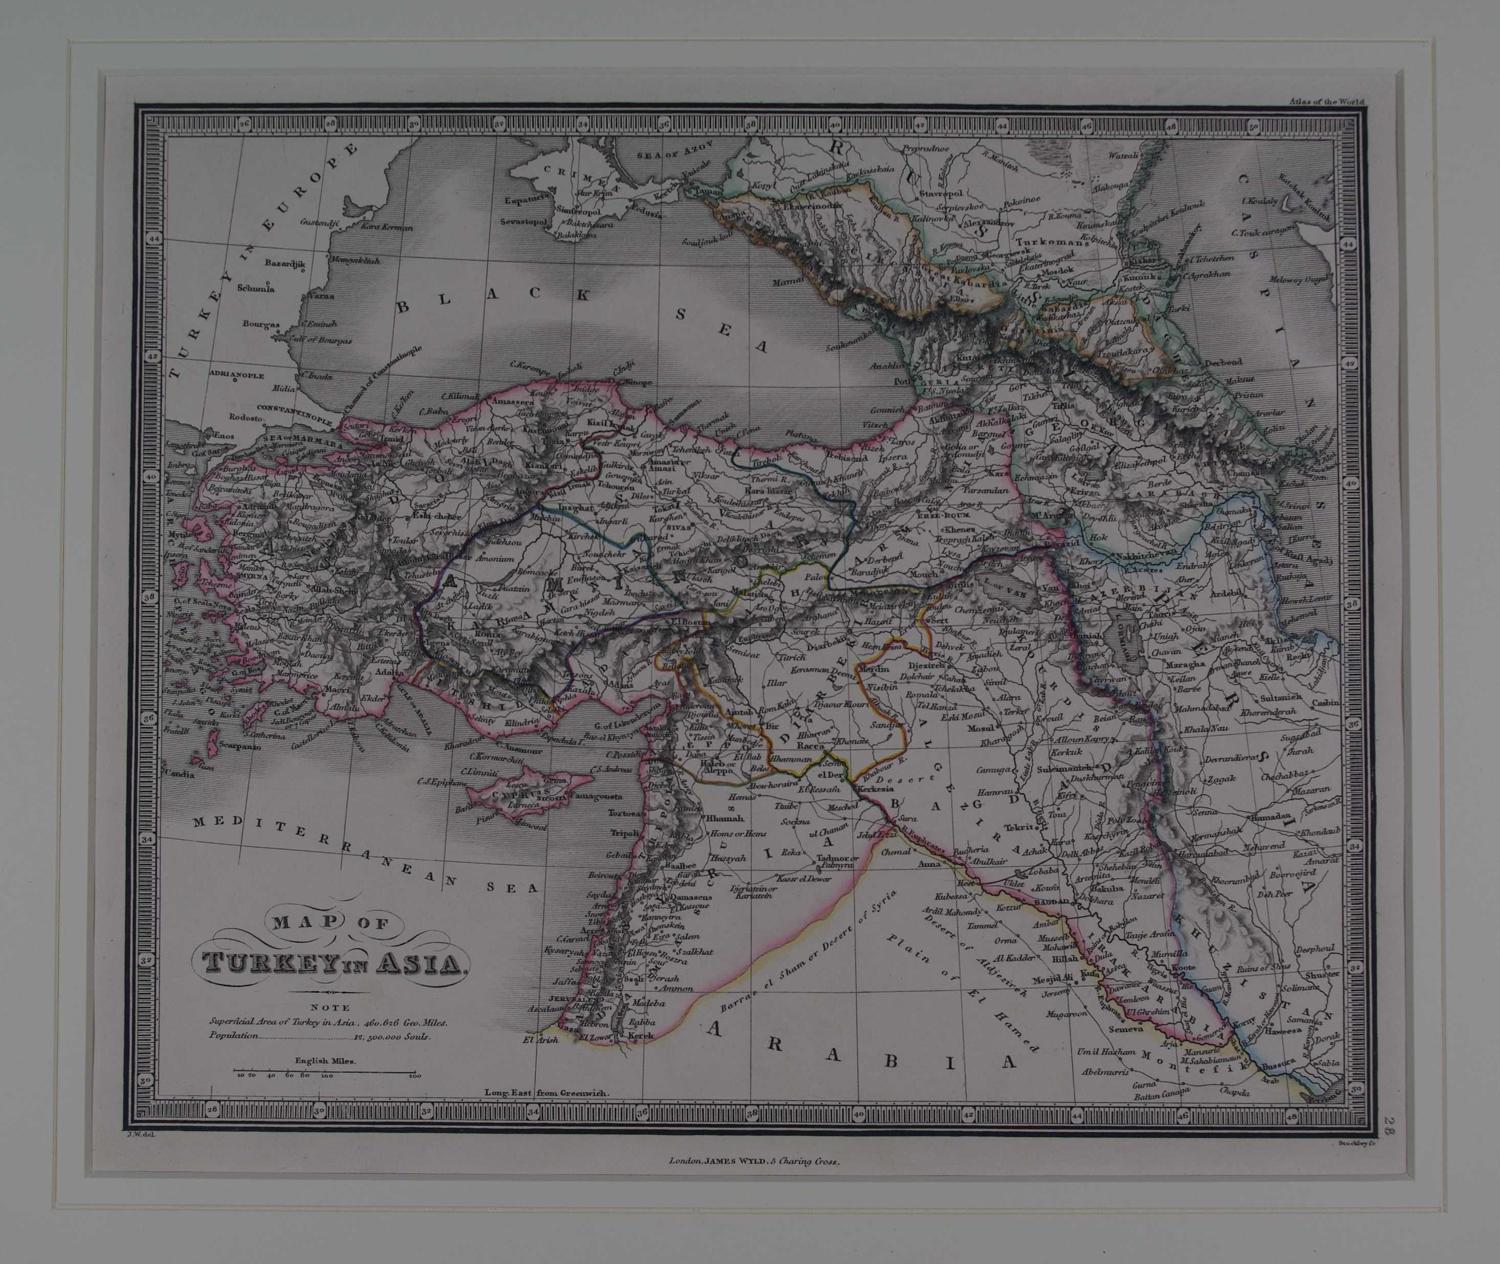 Turkey in Asia by James Wyld